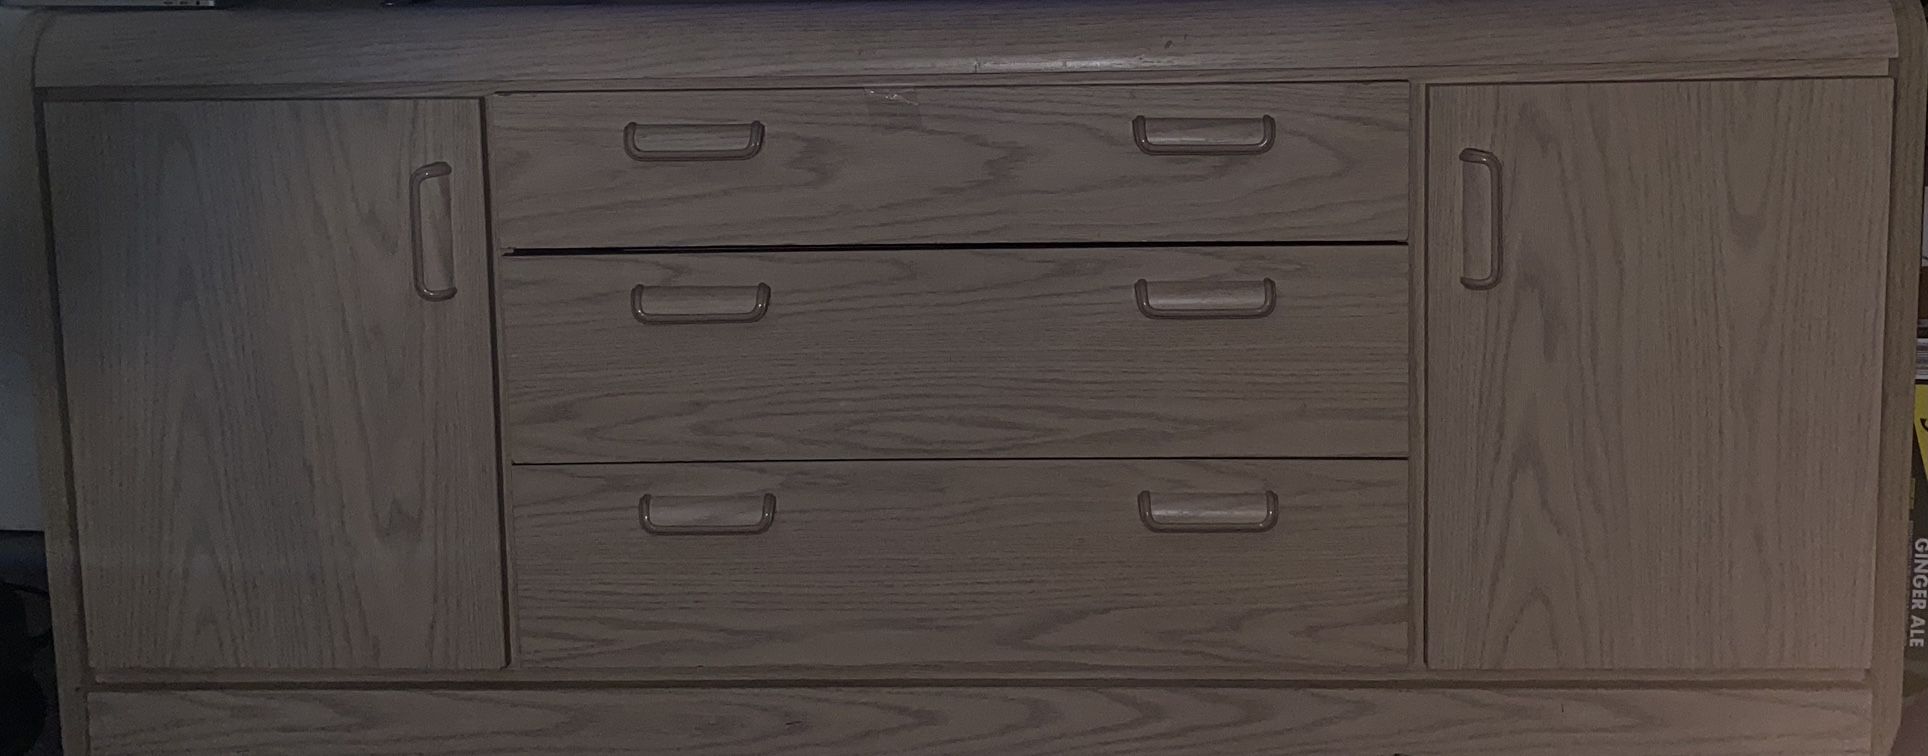 3 Drawer Dresser With One Shelf Cabinet 